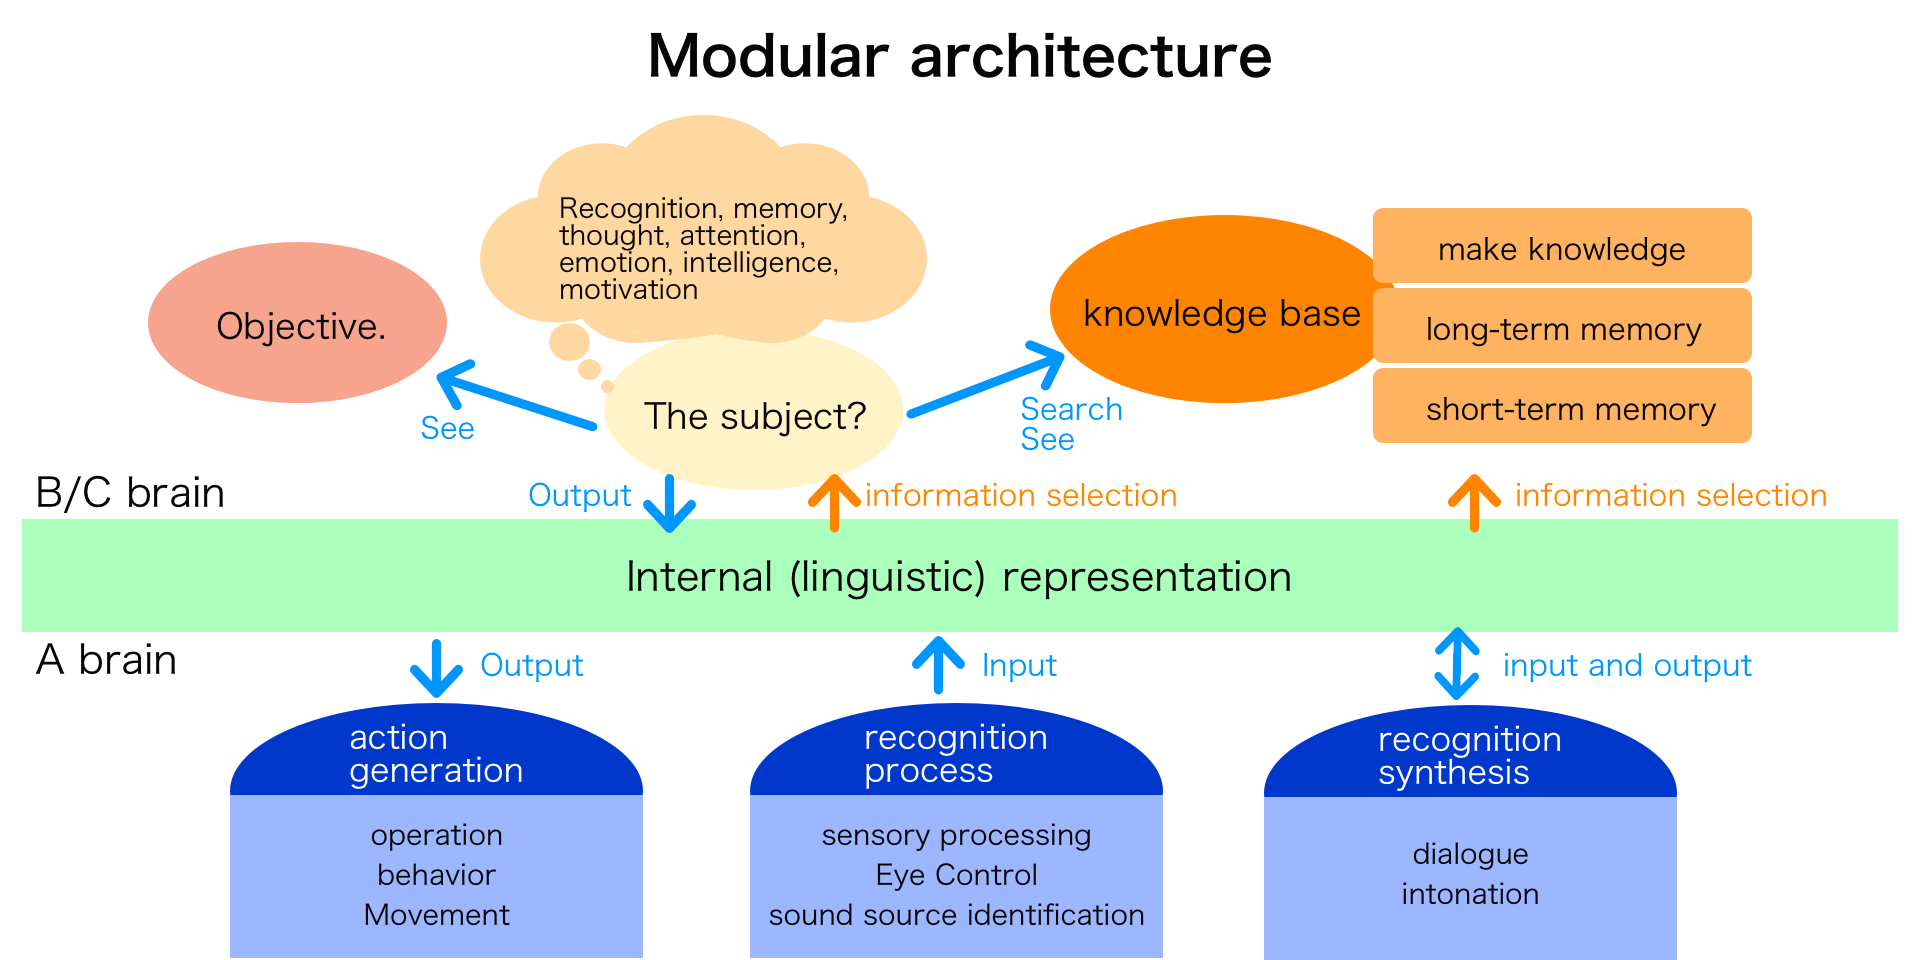 Modular architecture